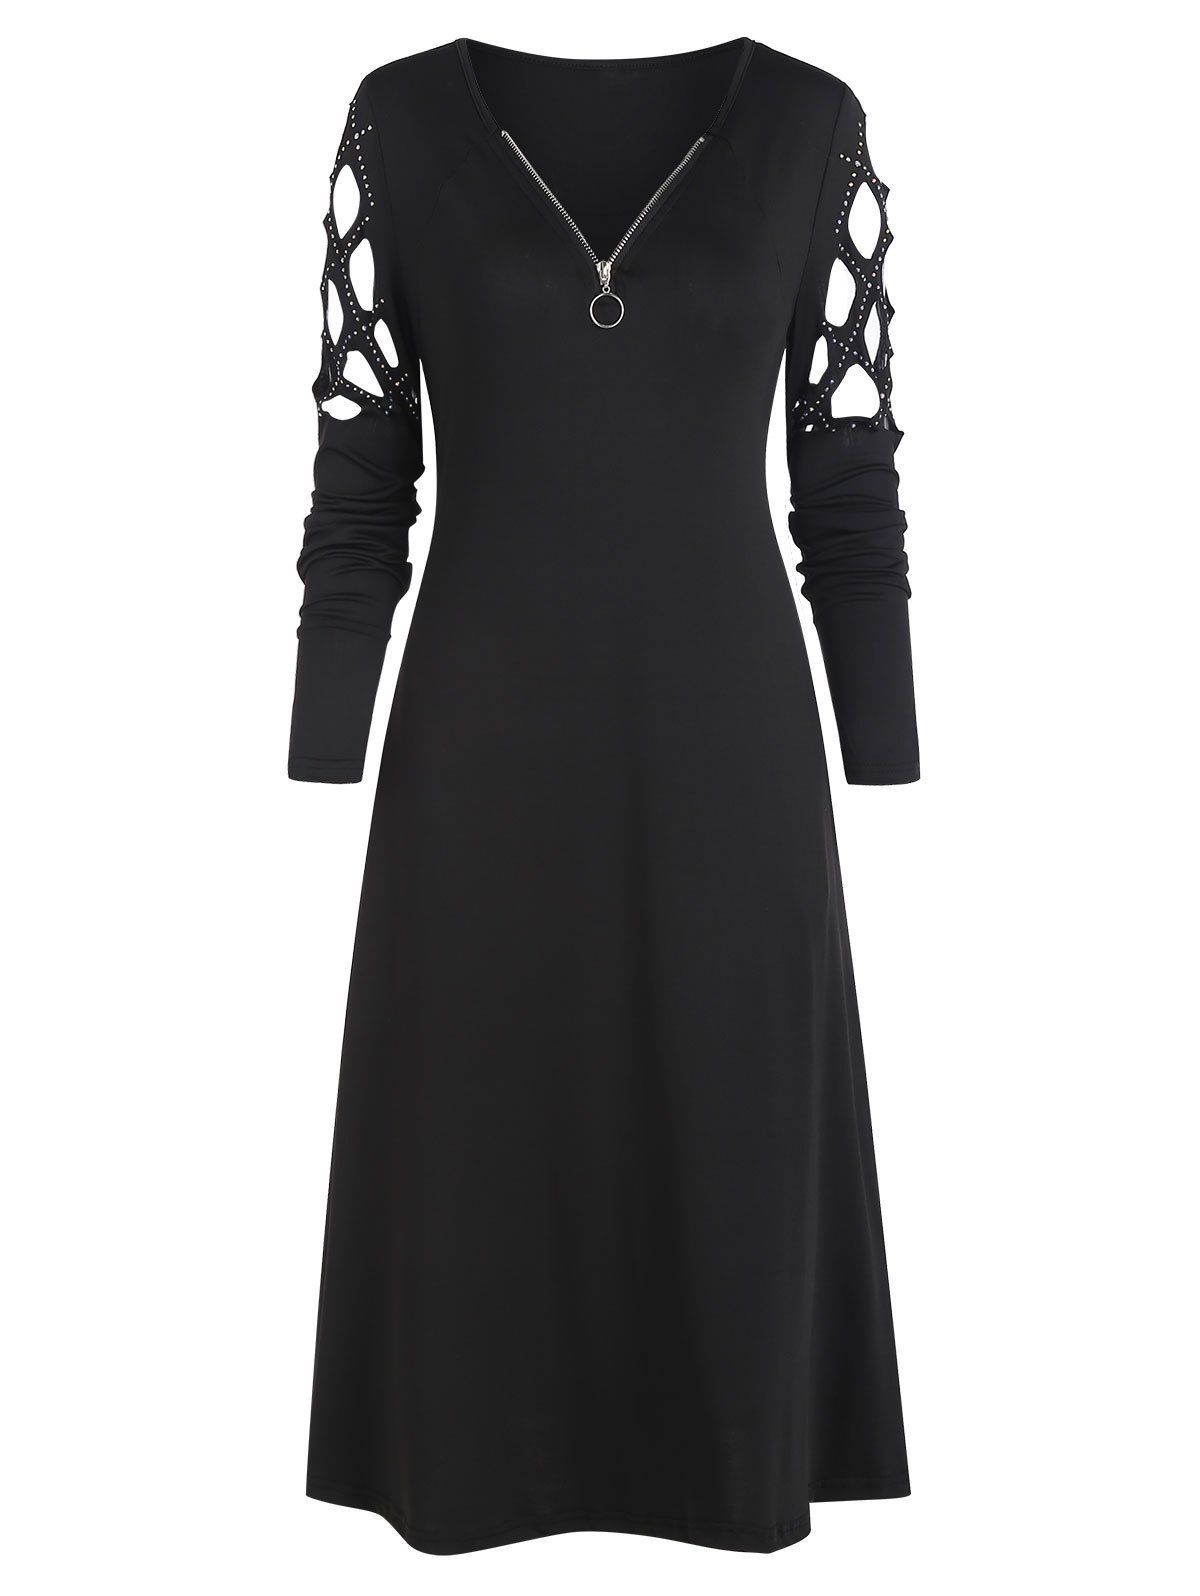 Rhinestone Caged Sleeve O Ring Zip Dress - BLACK XL